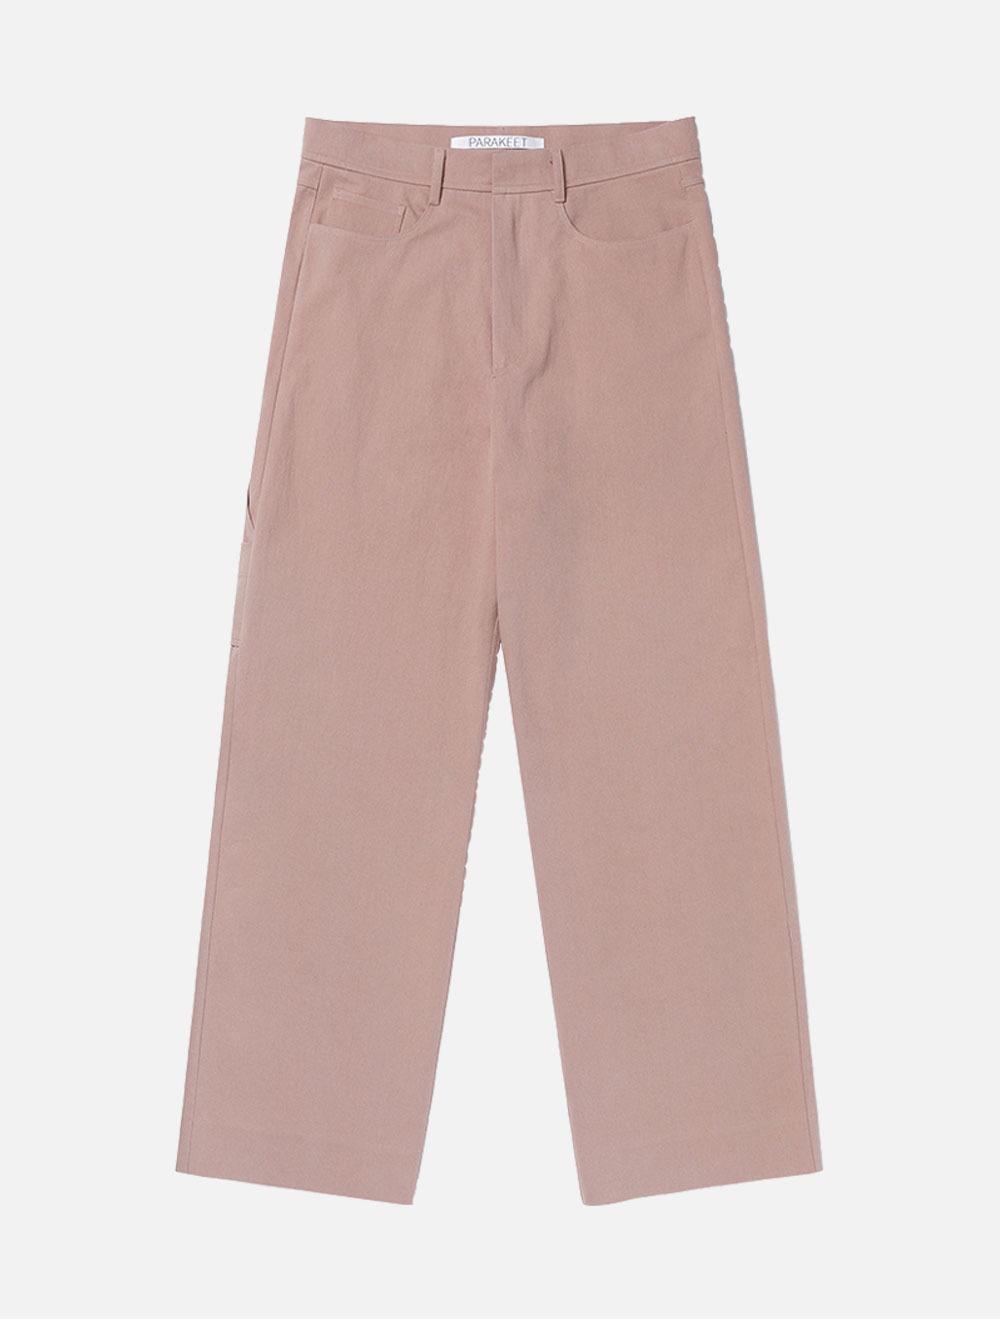 Carpanter Chino Pants (Indi Pink)